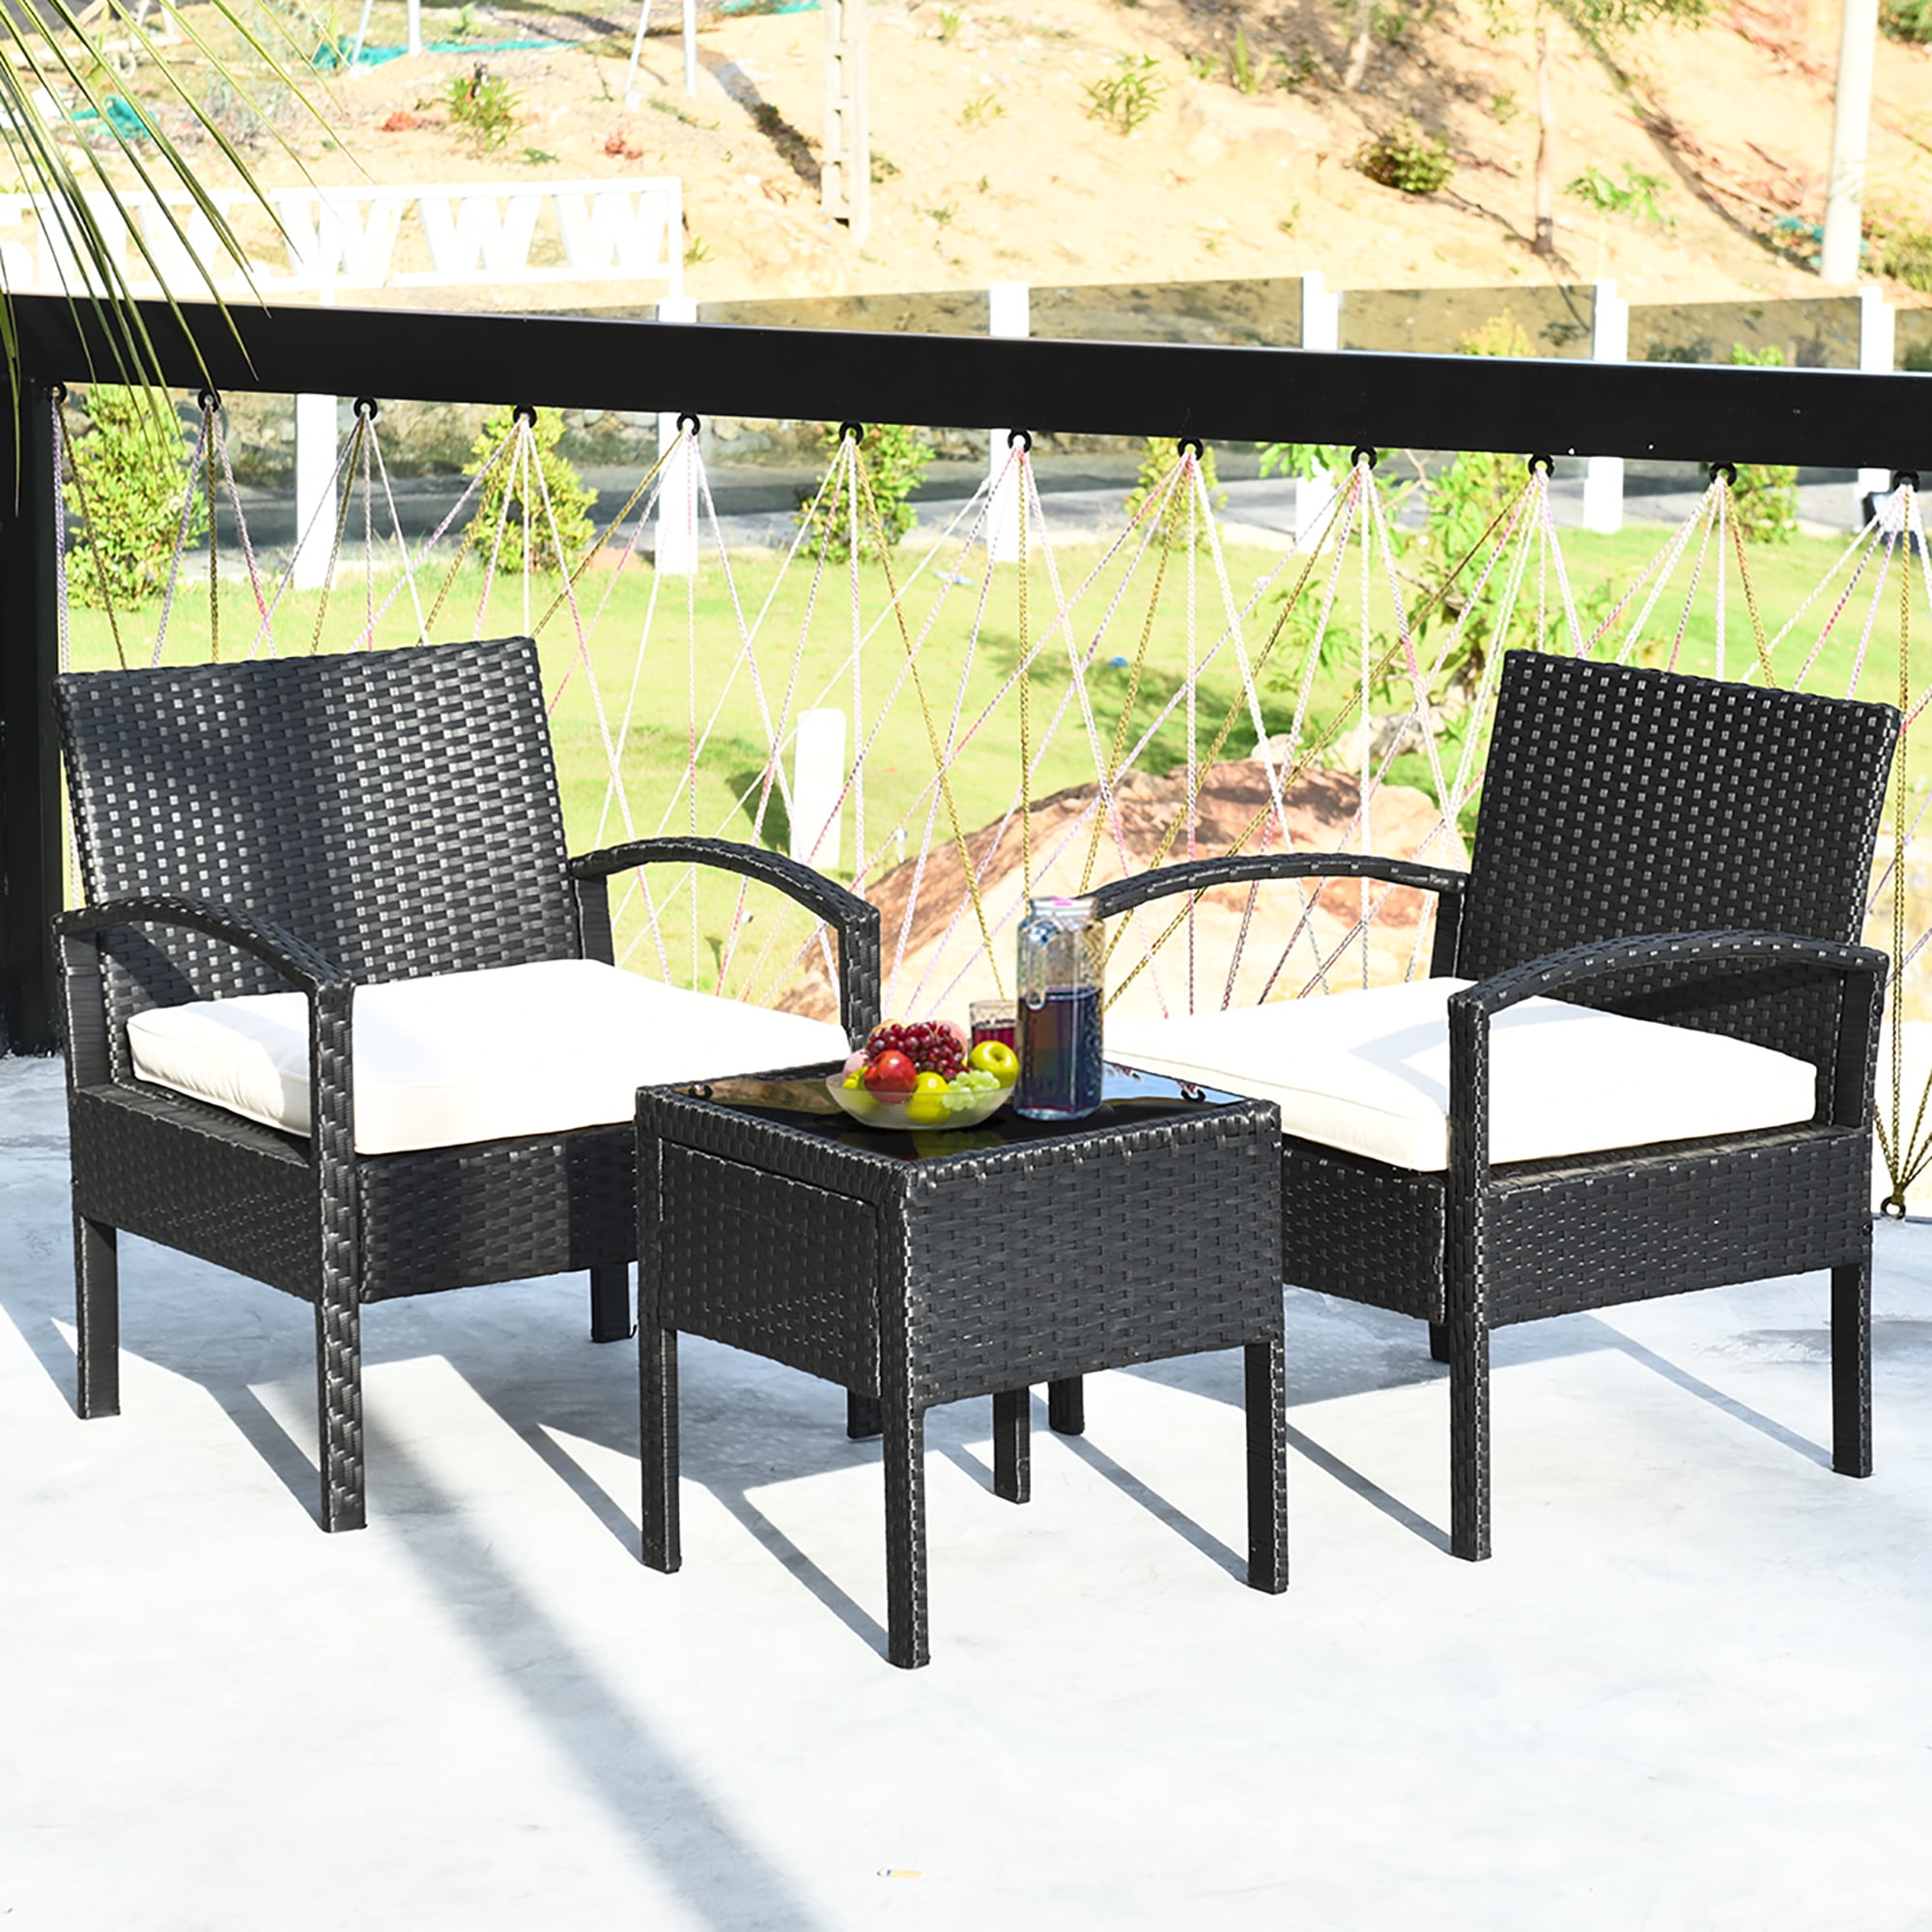 3PC Garden Wicker Furniture Set Foldable Rattan Table Chair Indoor/Outdoor Patio 